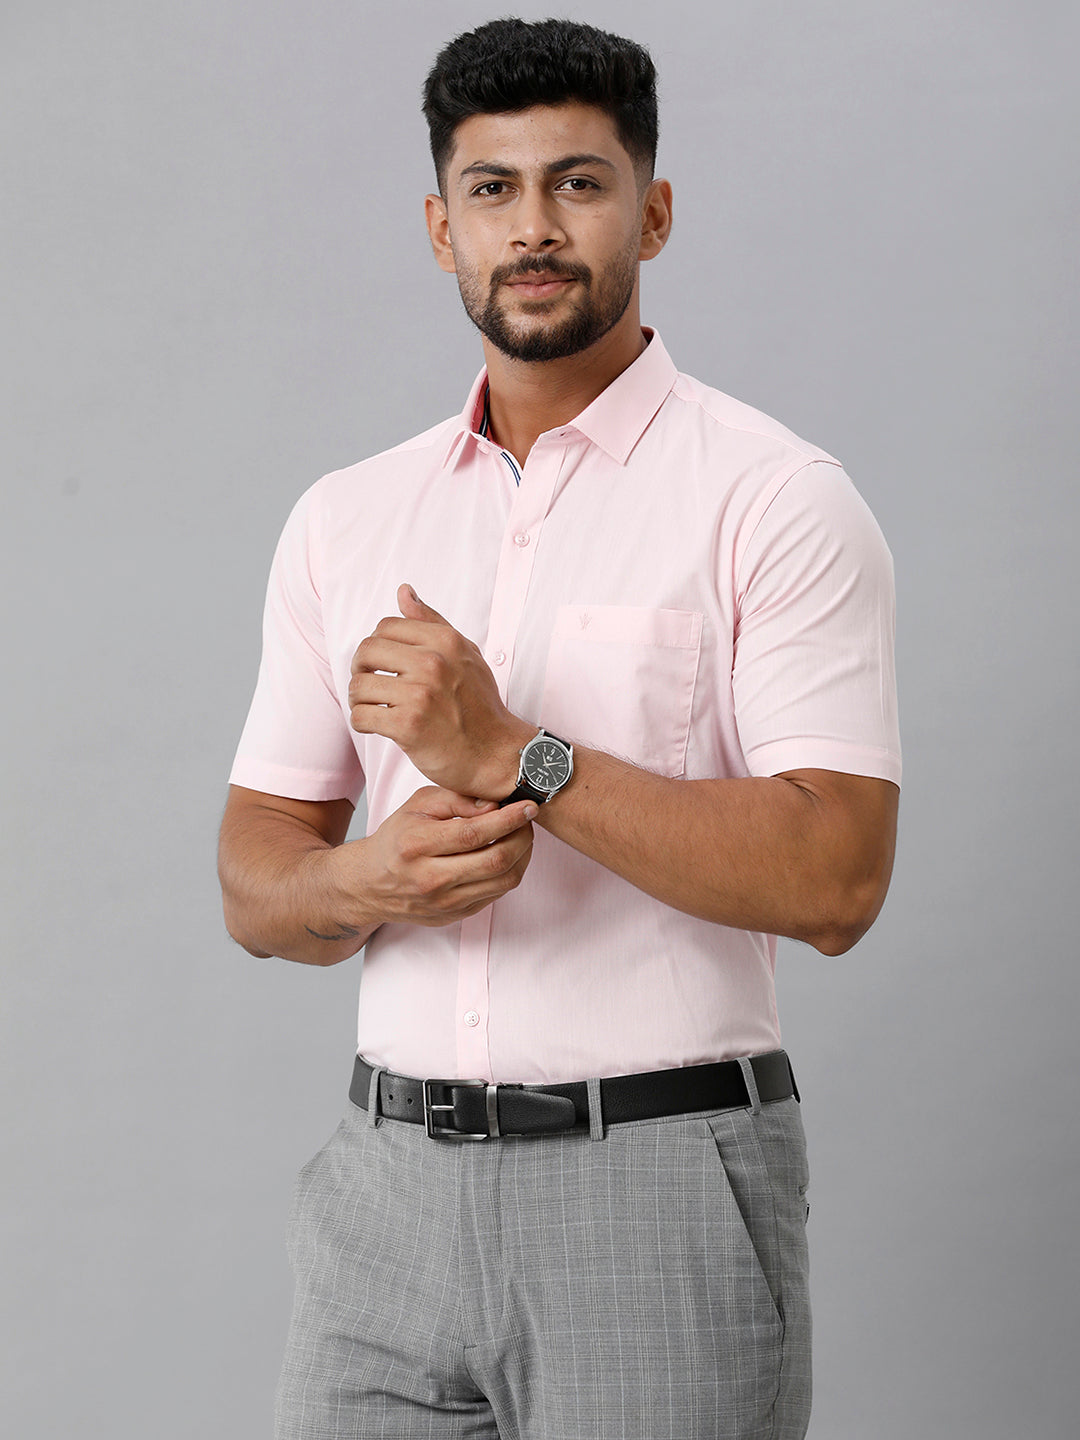 Mens Premium Cotton Formal Shirt Half Sleeves Light Pink MH G115